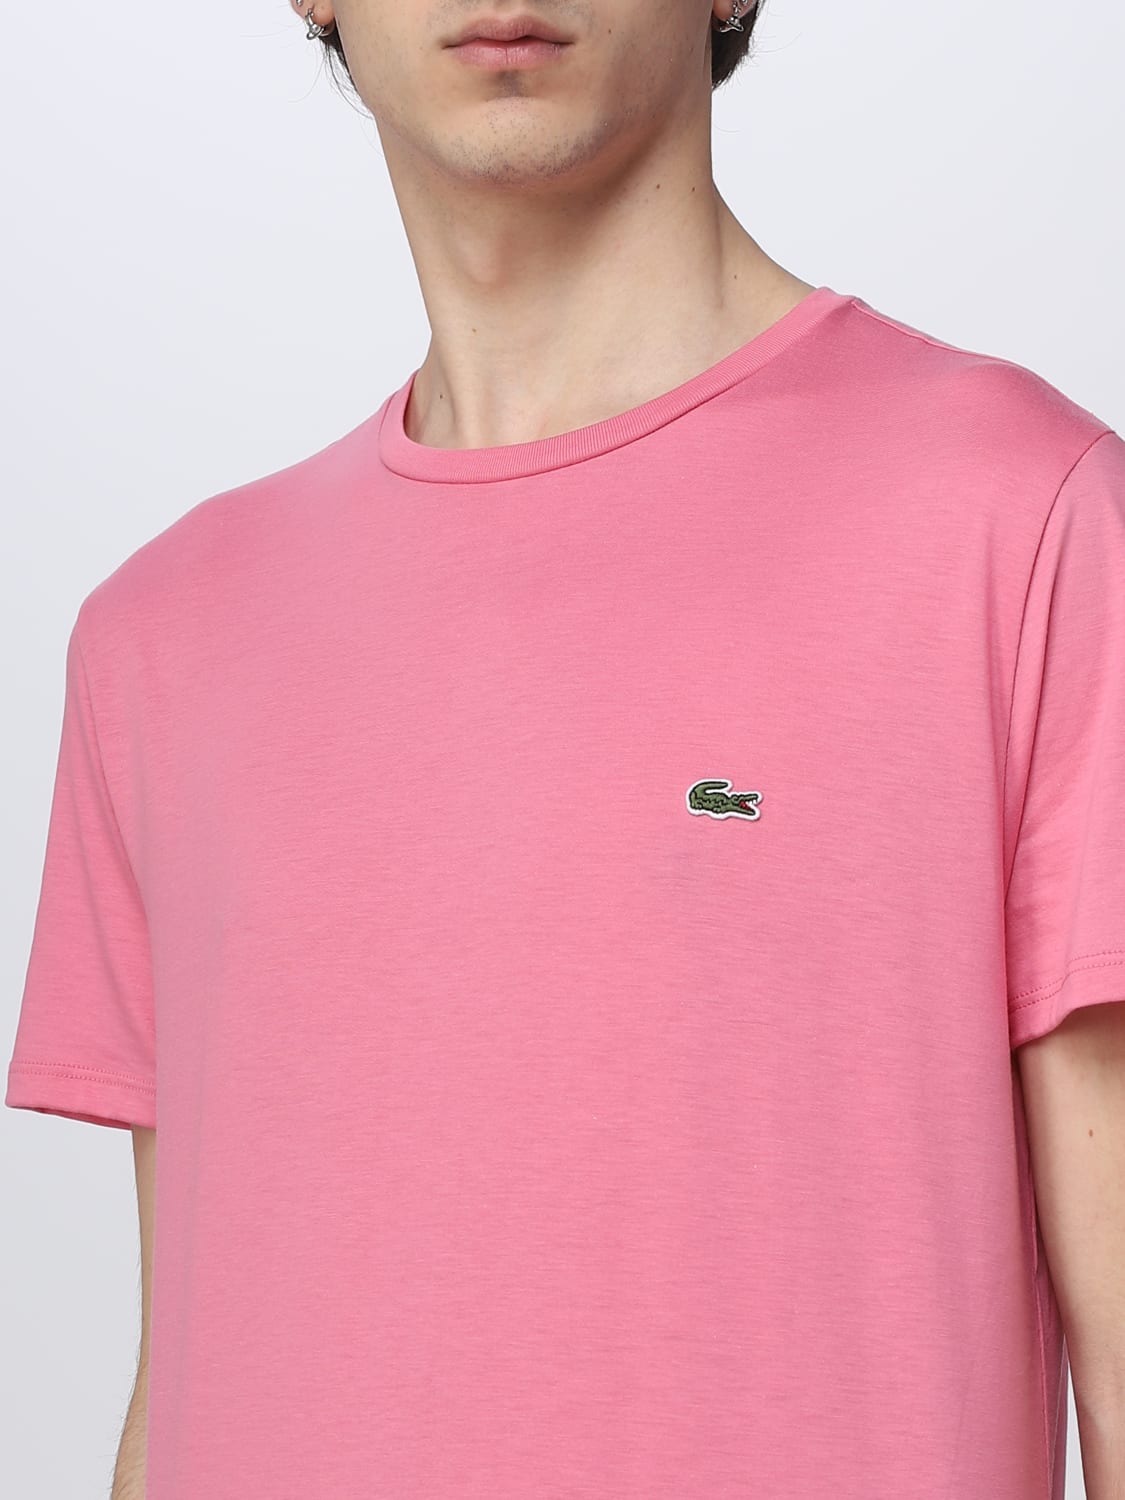 deform Settle Gravere LACOSTE: t-shirt for man - Fuchsia | Lacoste t-shirt TH6709 online on  GIGLIO.COM